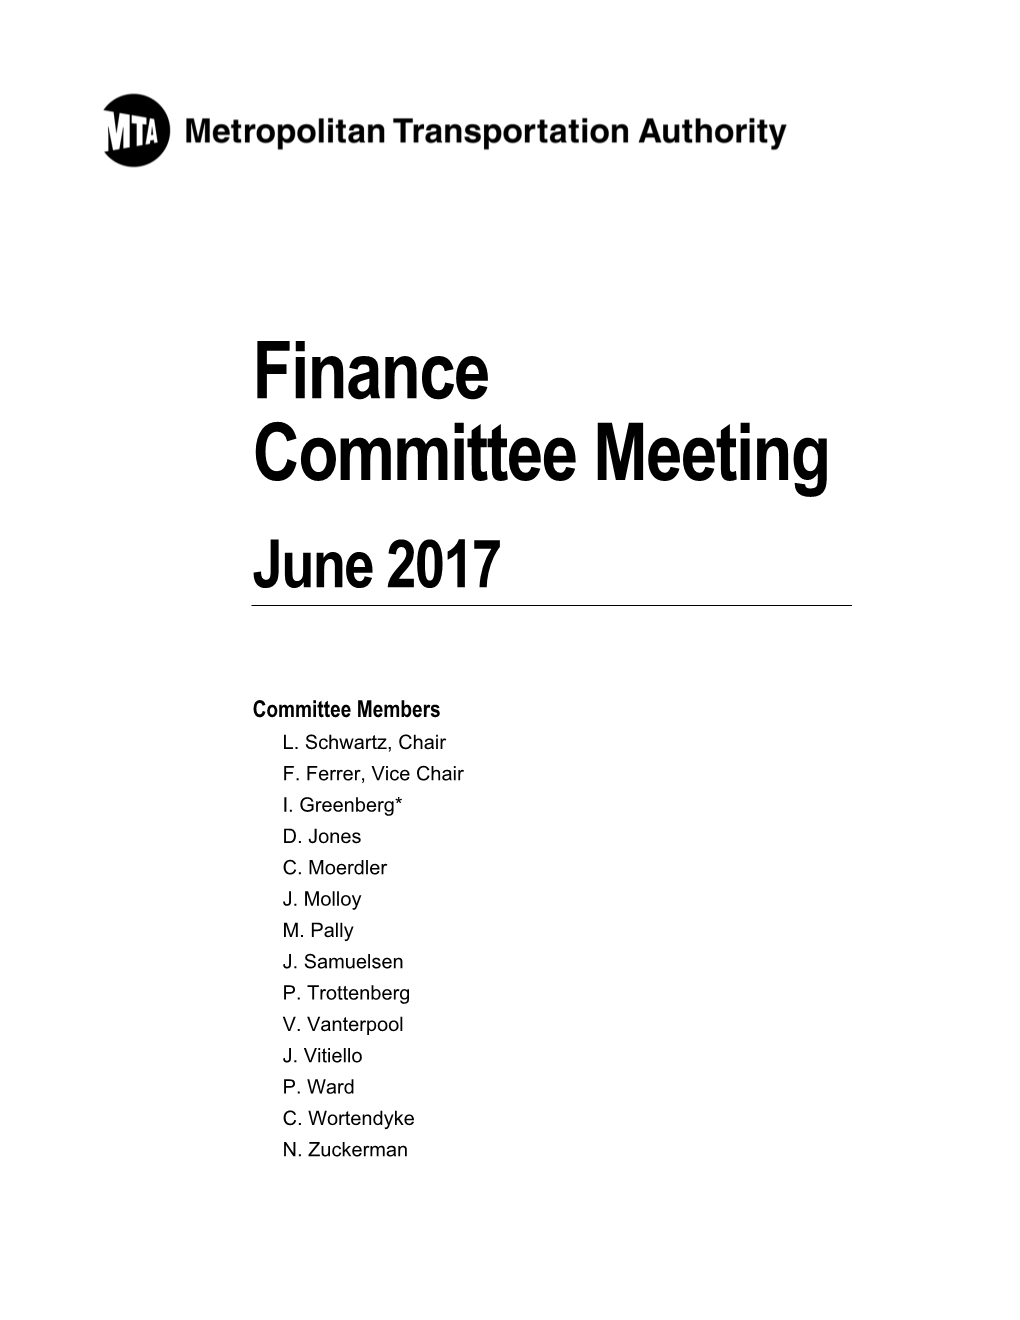 Finance Committee Meeting June 2017